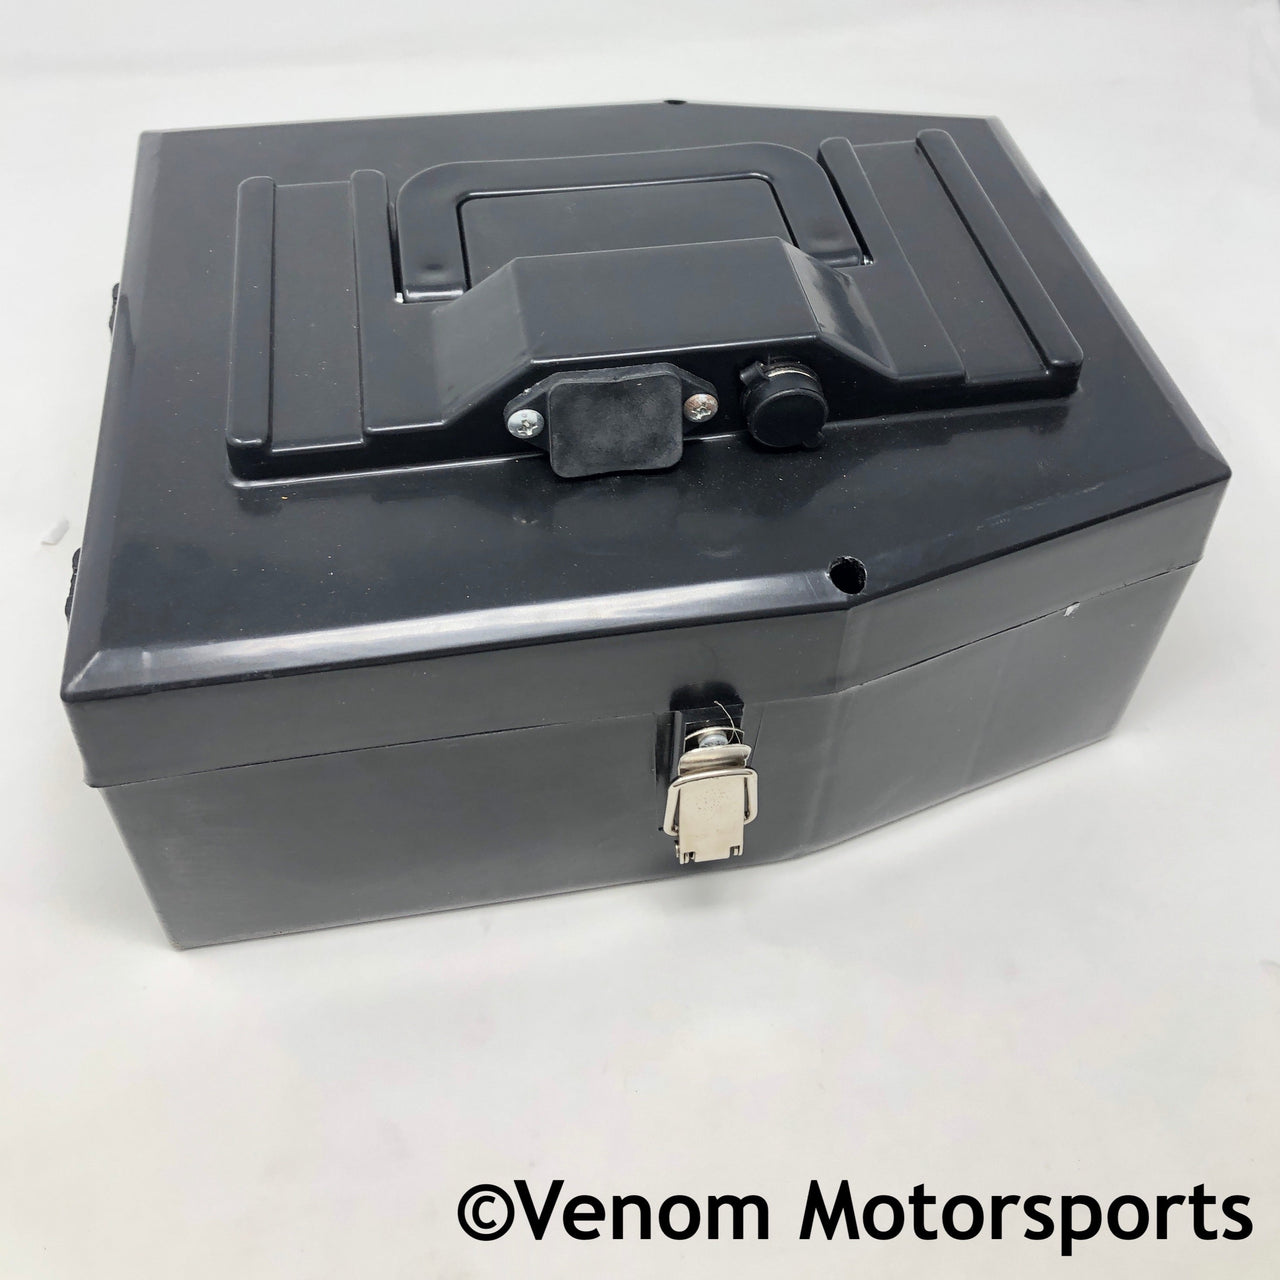 Replacement / Spare 36V Battery Pack for Venom Quad Racer 1000W ATV 36V